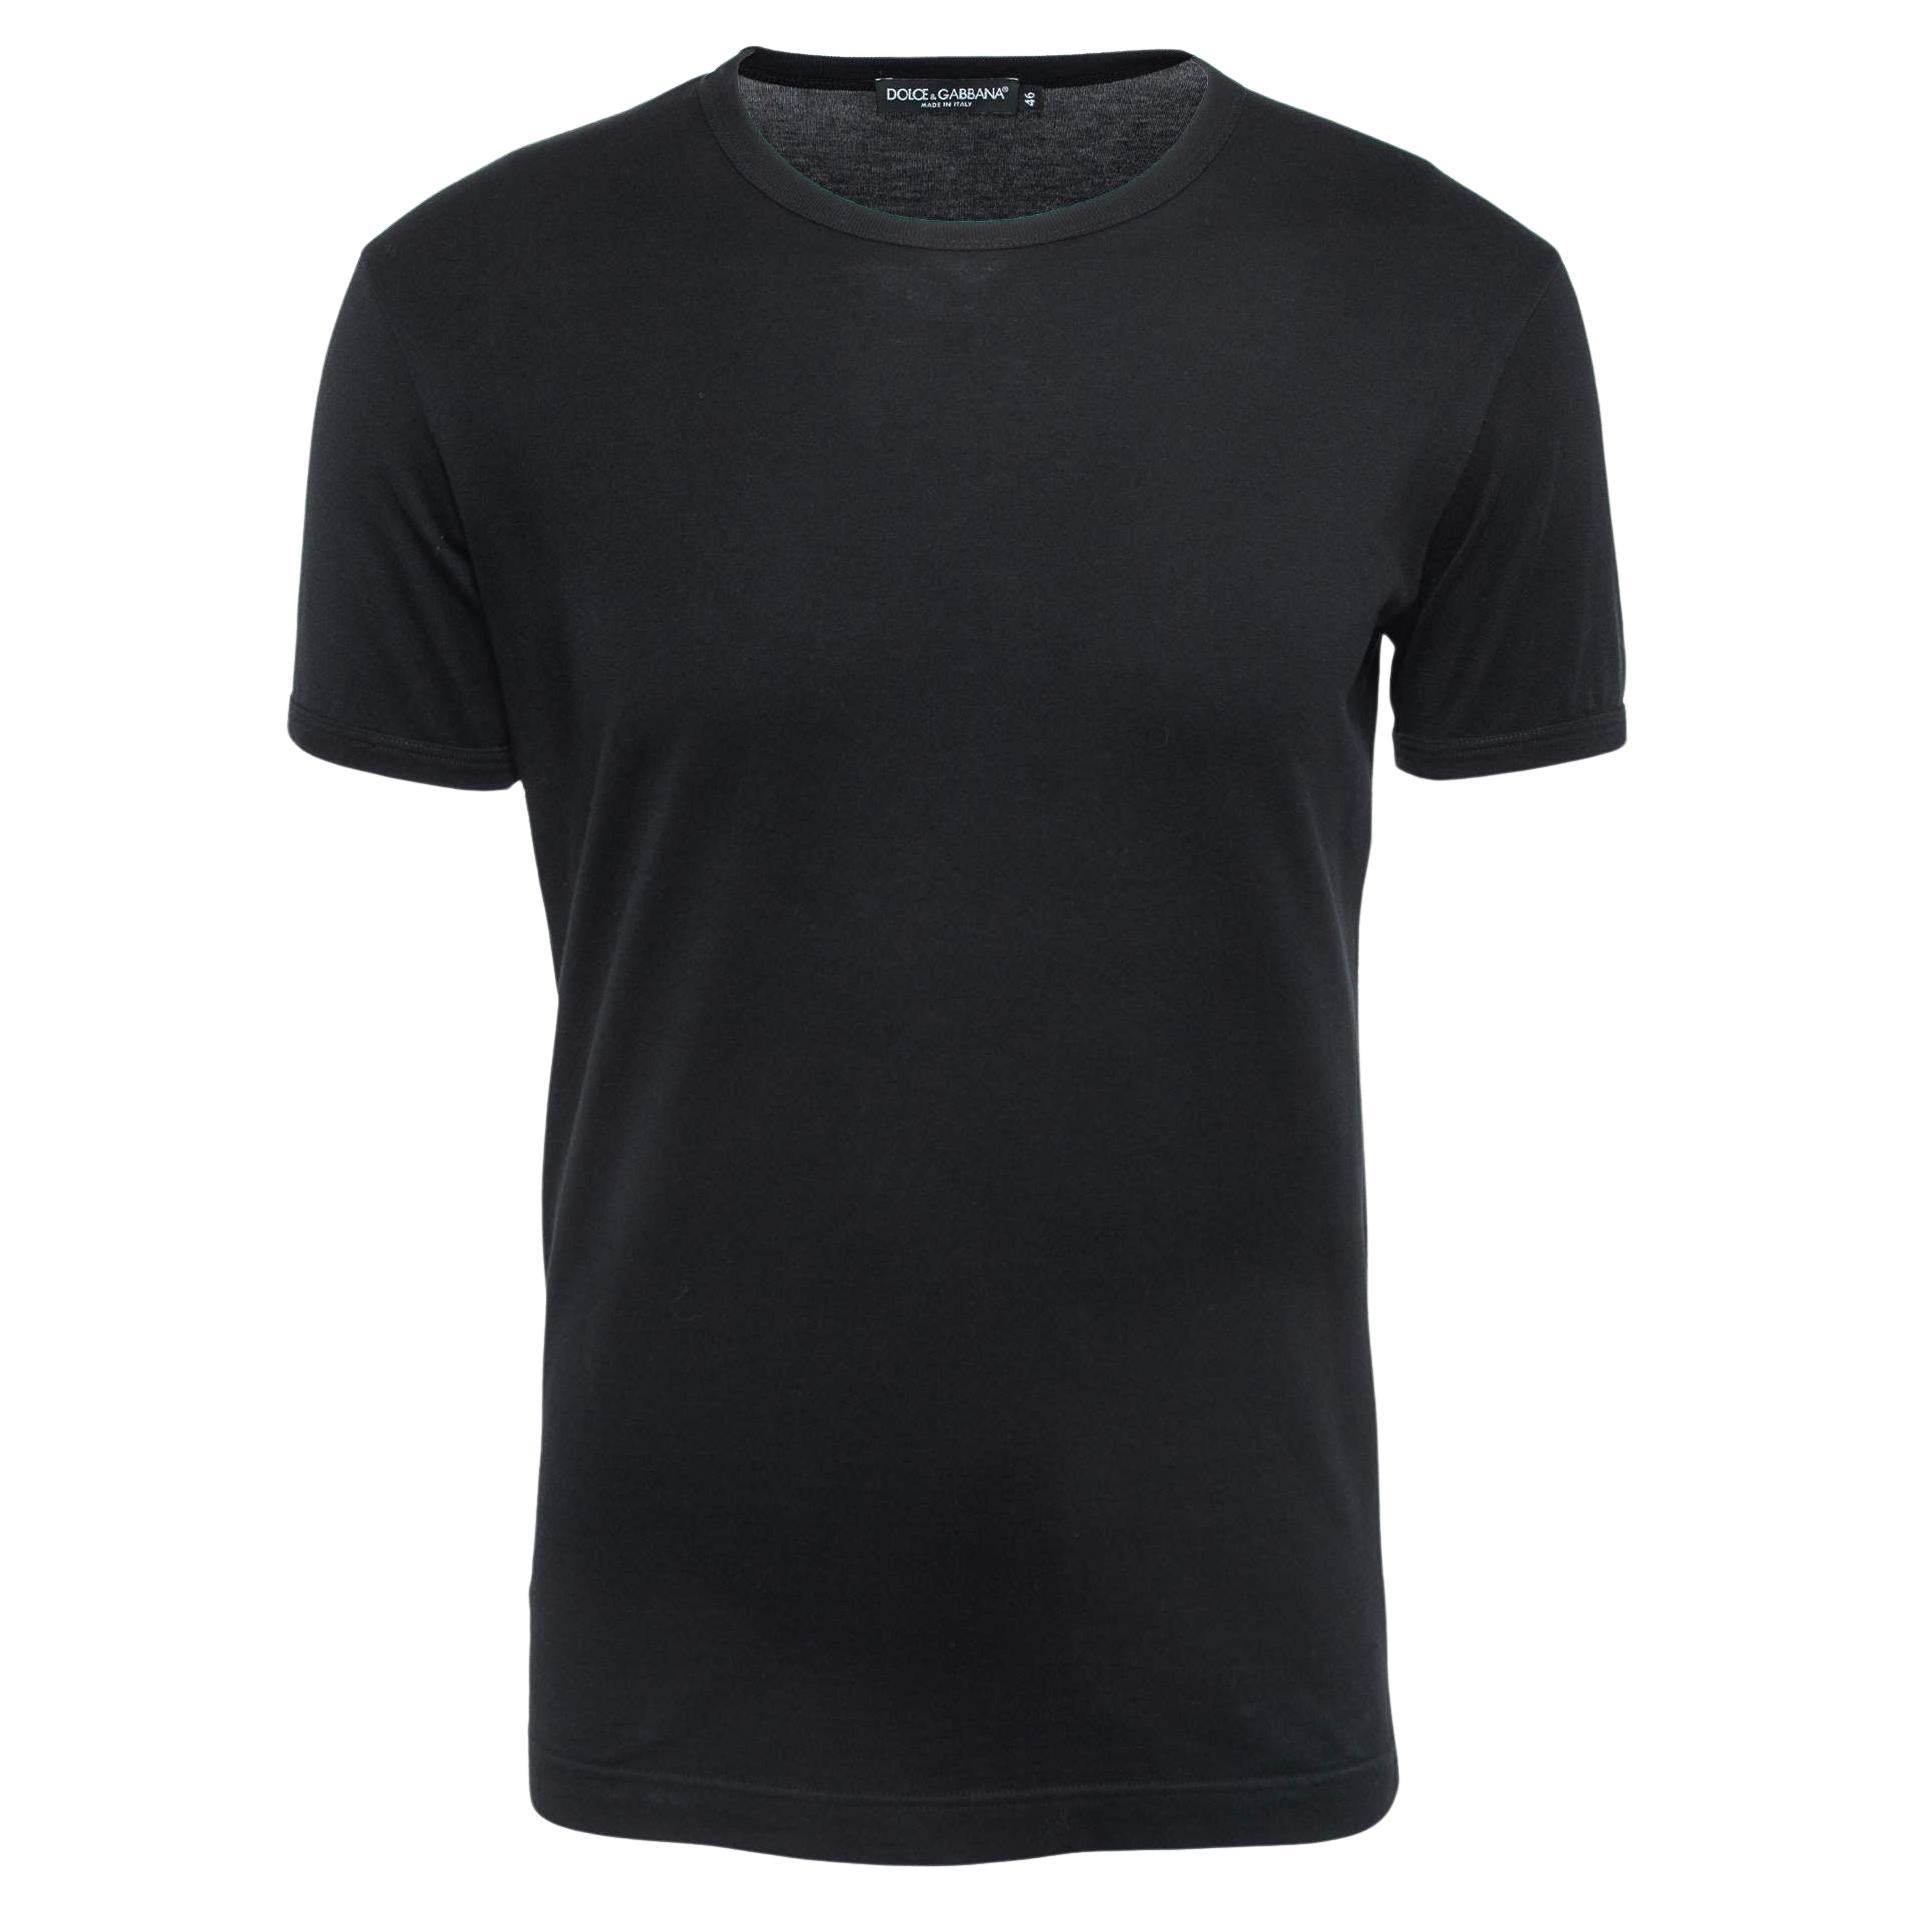 Dolce & Gabbana Black Cotton Crew Neck Half Sleeve T-Shirt S For Sale